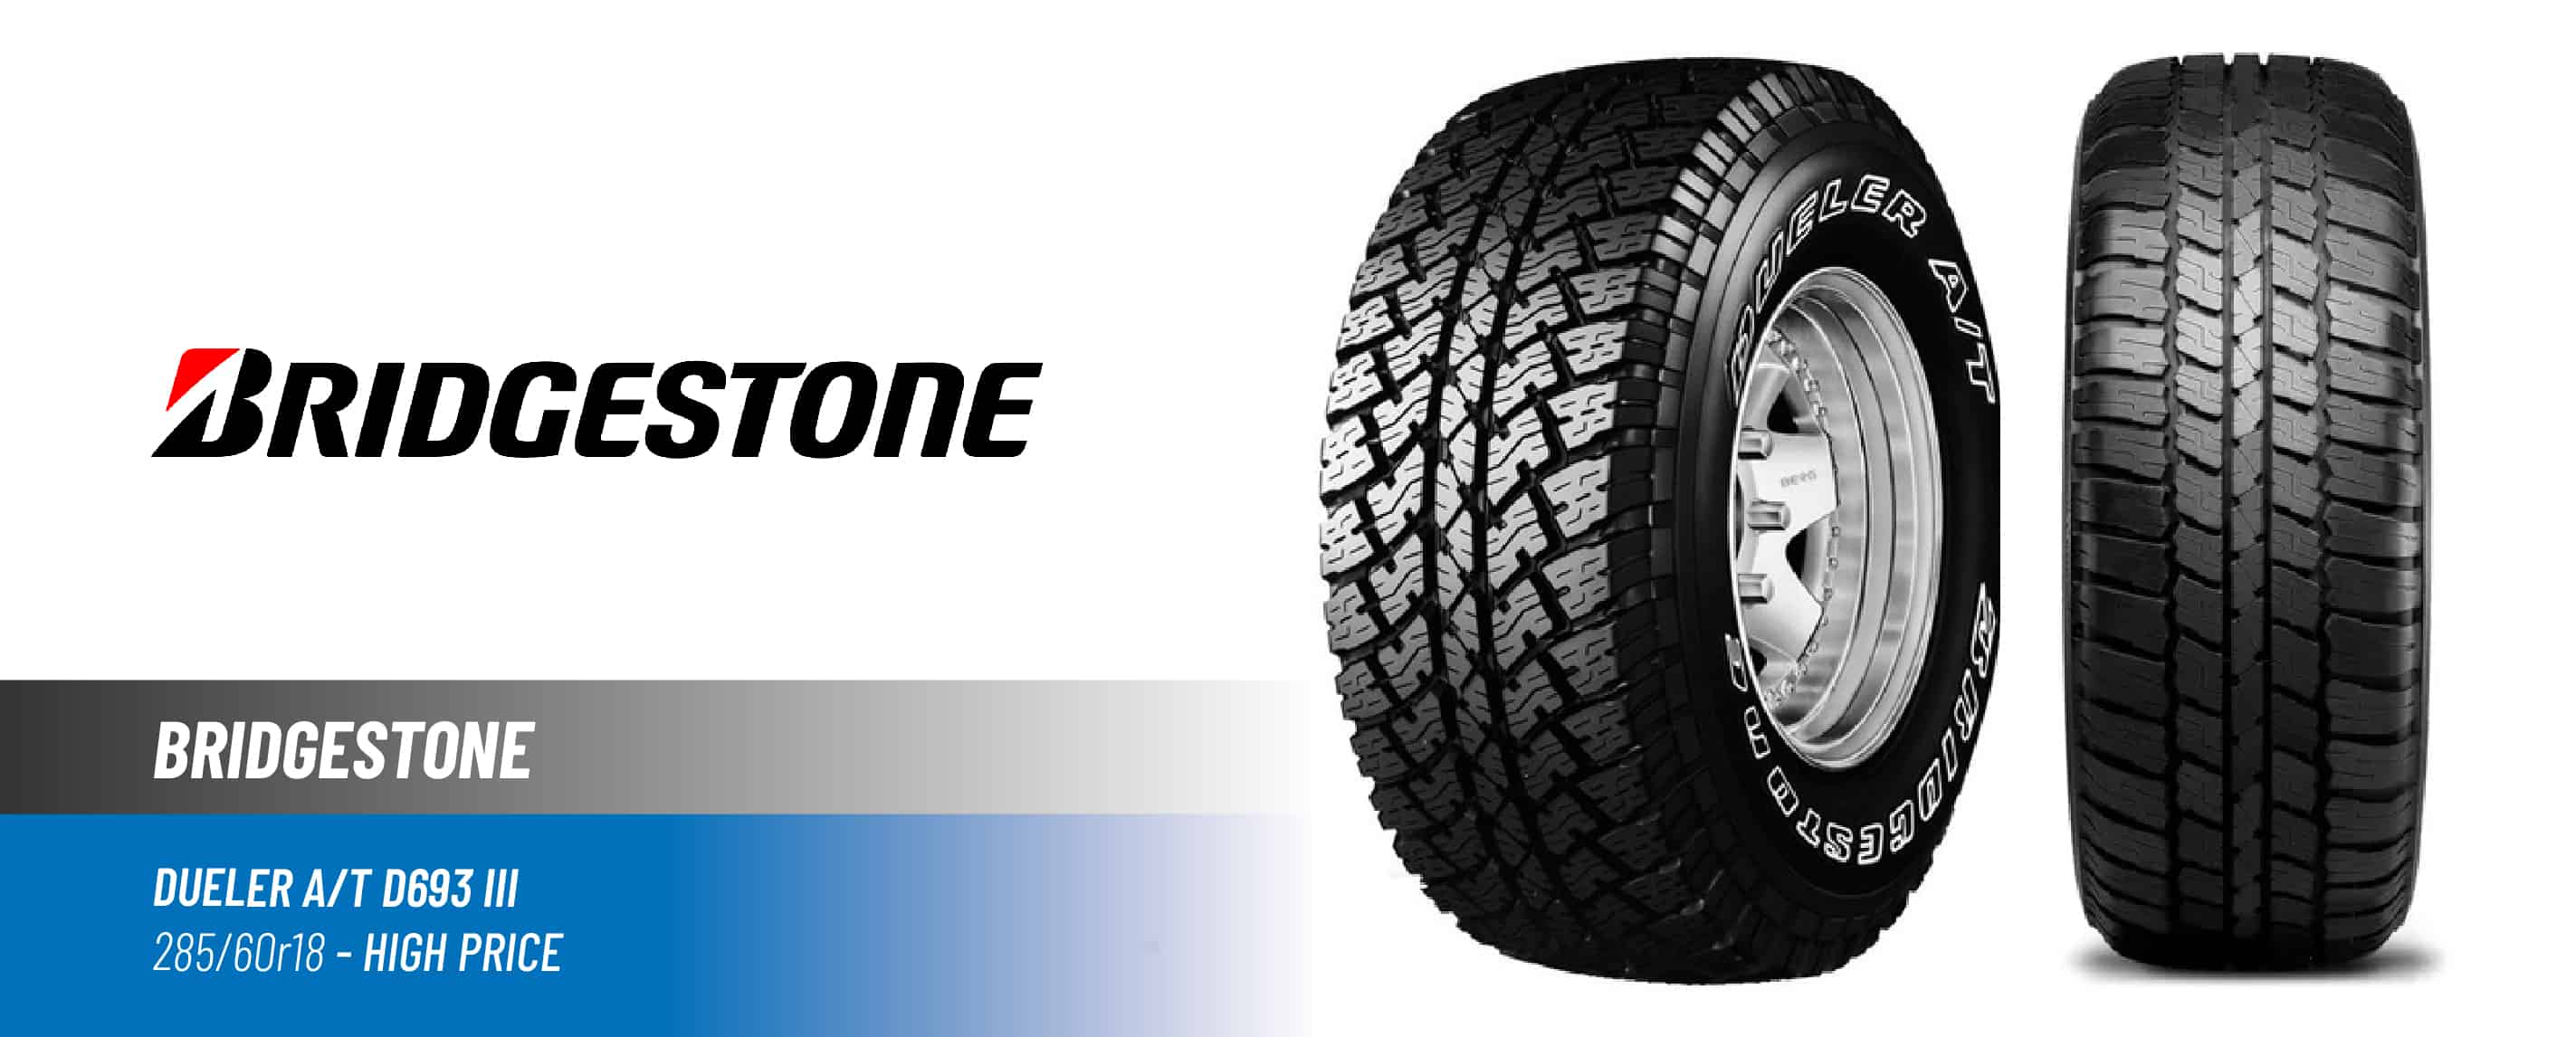 Top#5 High Price: Bridgestone Dueler A/T D693 III – best 285/60 r18